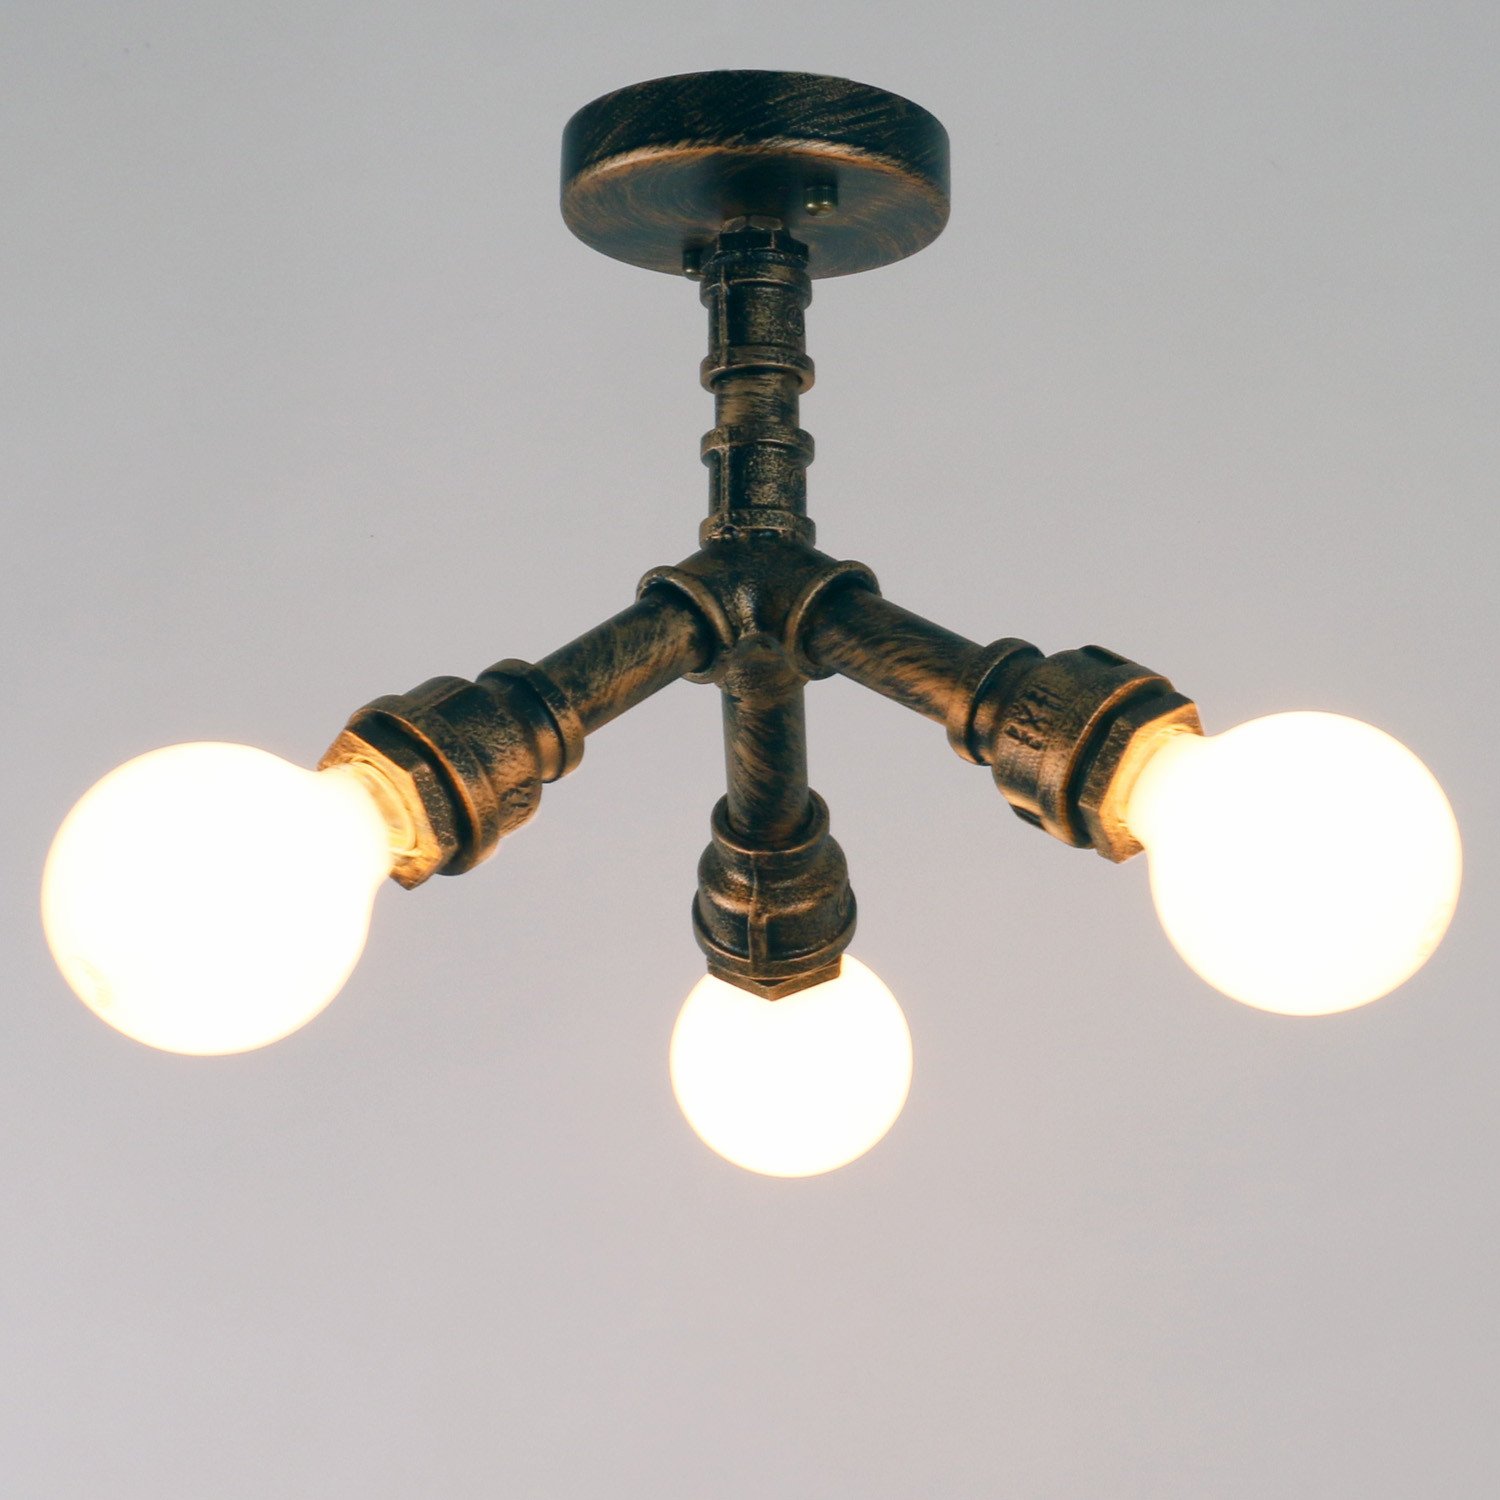 The rise of 3 bulb ceiling light | Warisan Lighting